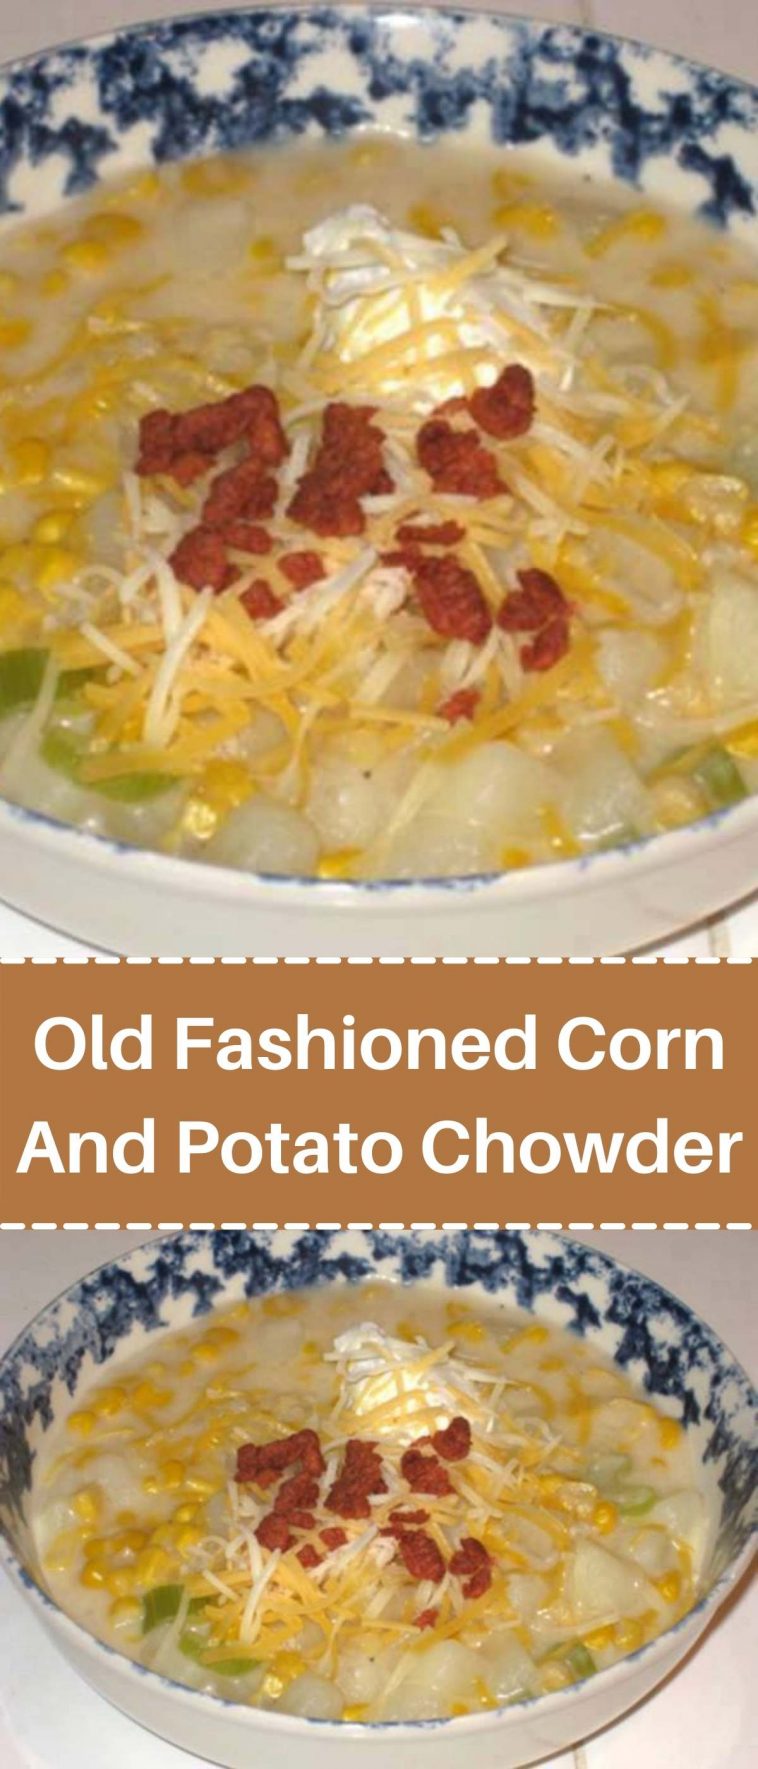 Old Fashioned Corn And Potato Chowder